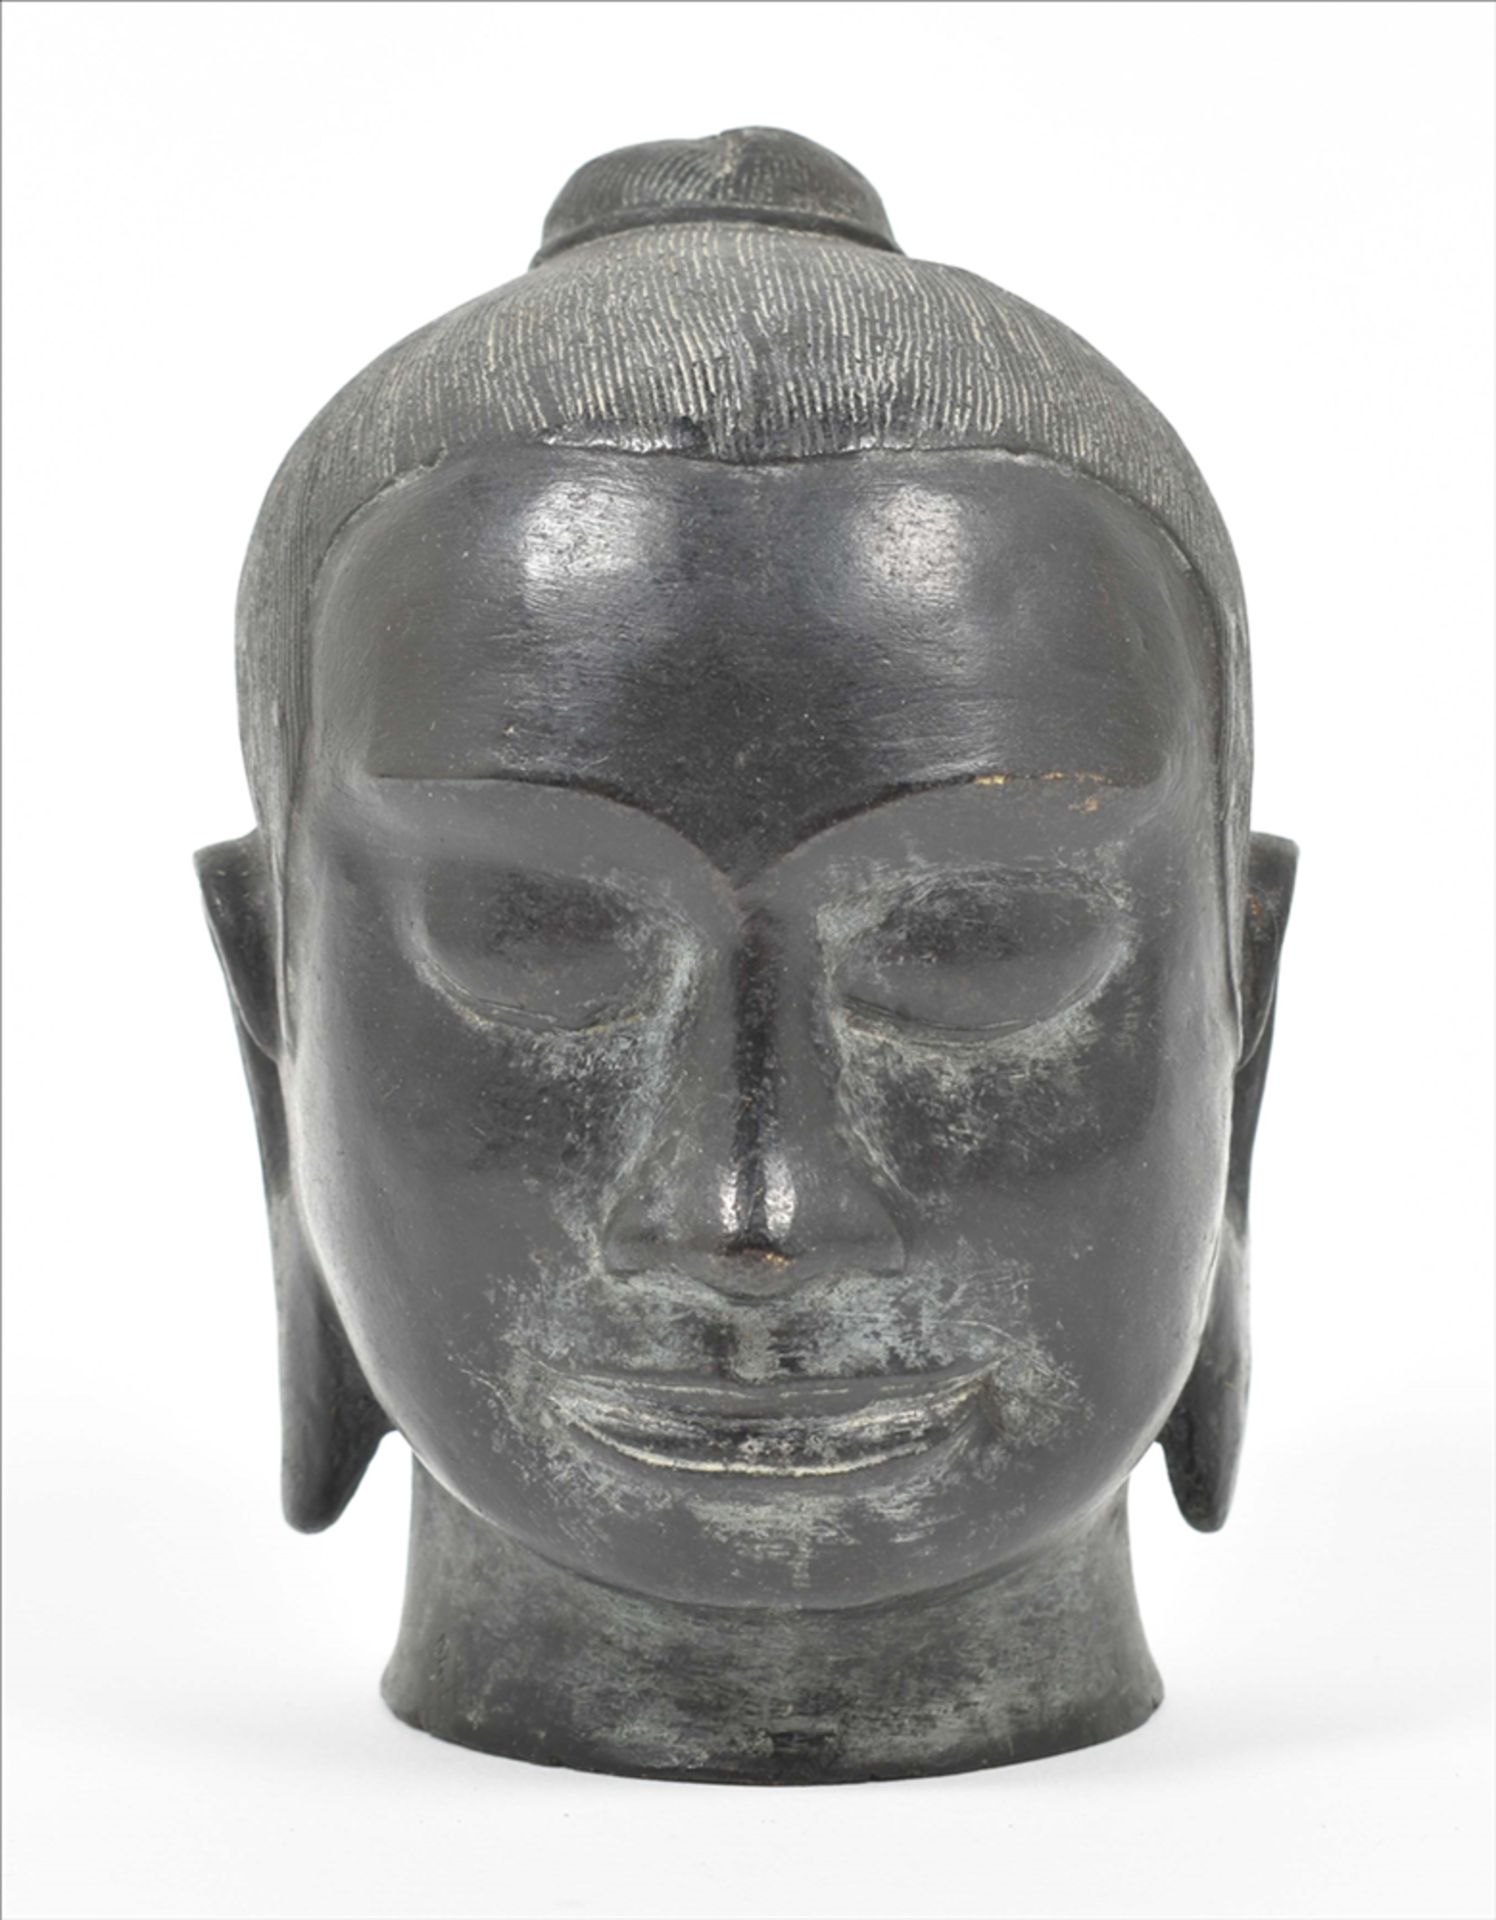 Head of the Khmer king Jayavarman VII